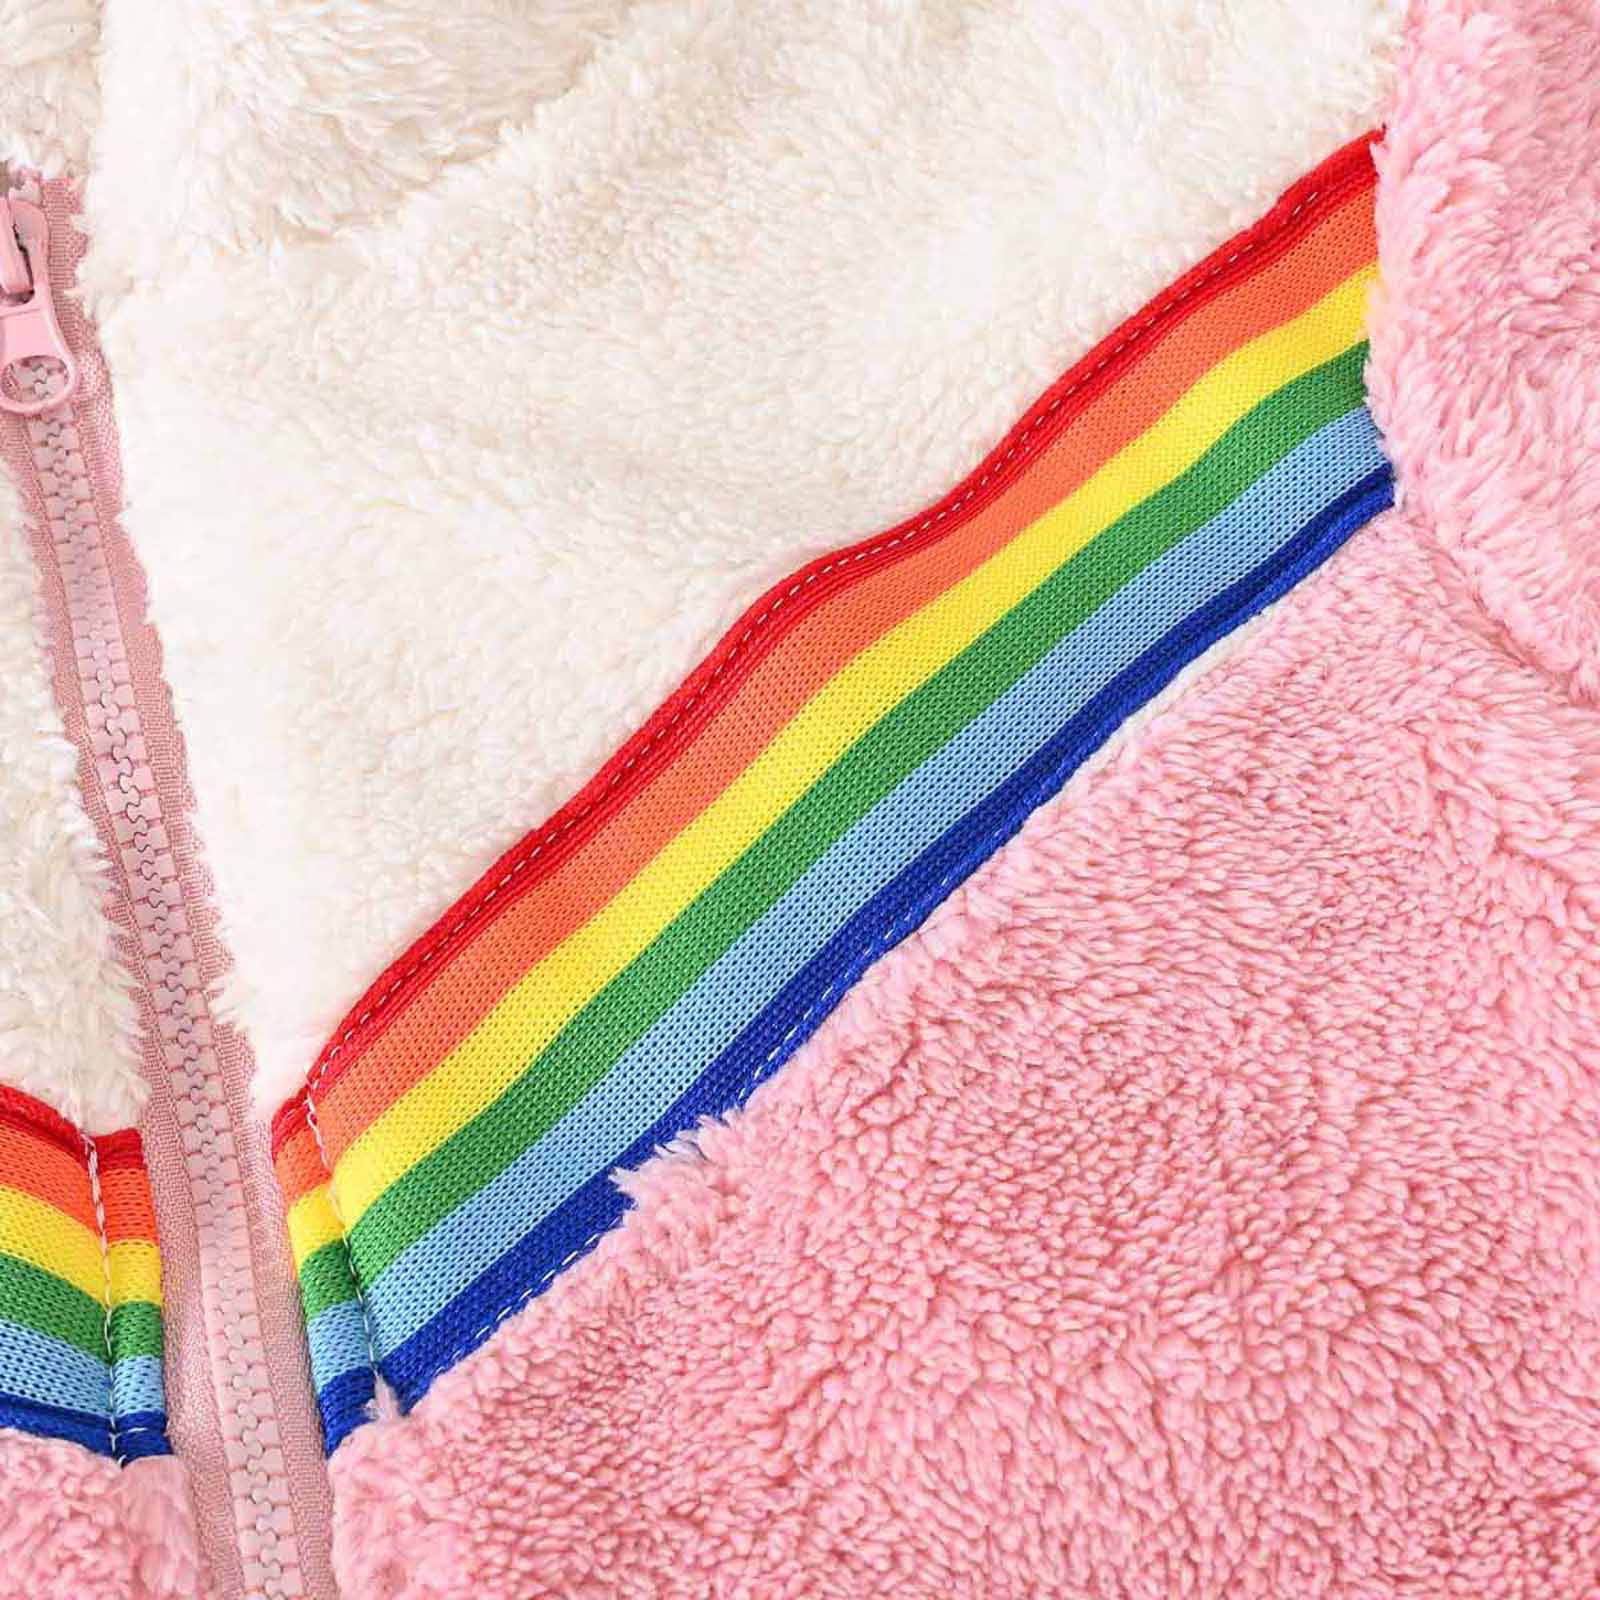 YYDGH Girls Zipper Jacket Fuzzy Sweatshirt Long Sleeve Casual Cozy Fleece Sherpa Outwear Coat Full-Zip Rainbow Jackets(Pink,7-8 Years) - image 3 of 8